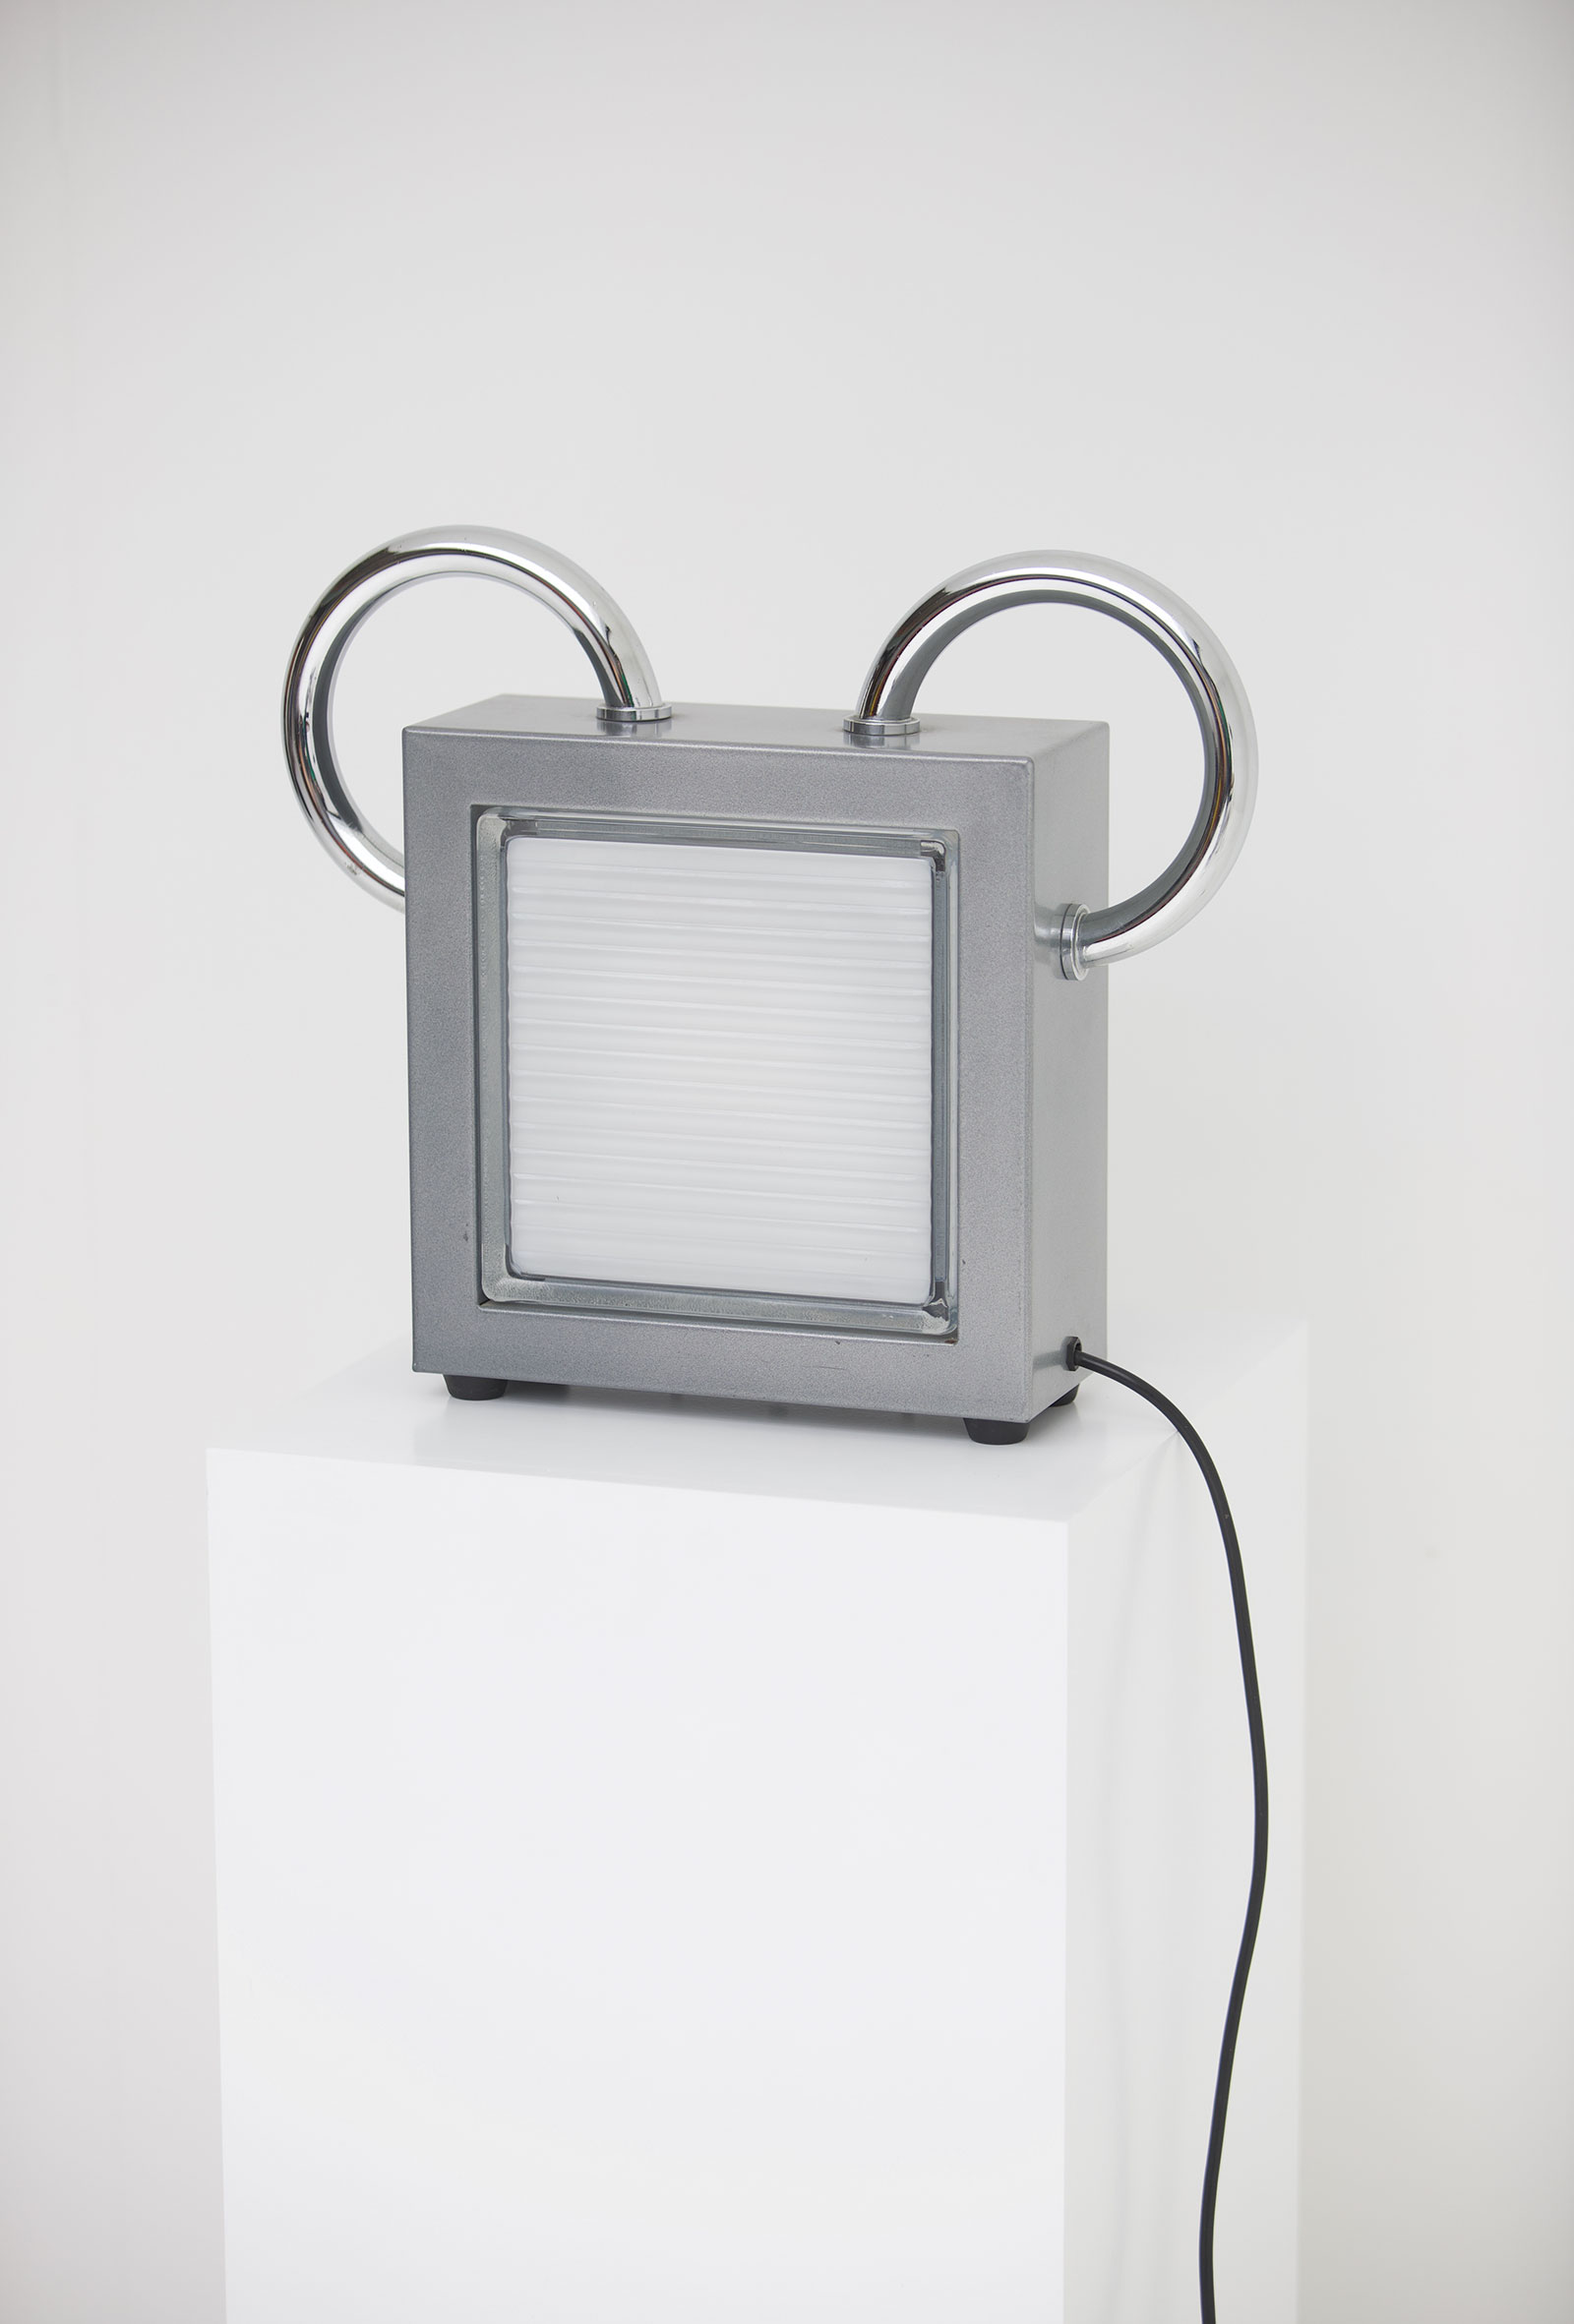 Matteo Thun Topolino table lamp 1989image 4